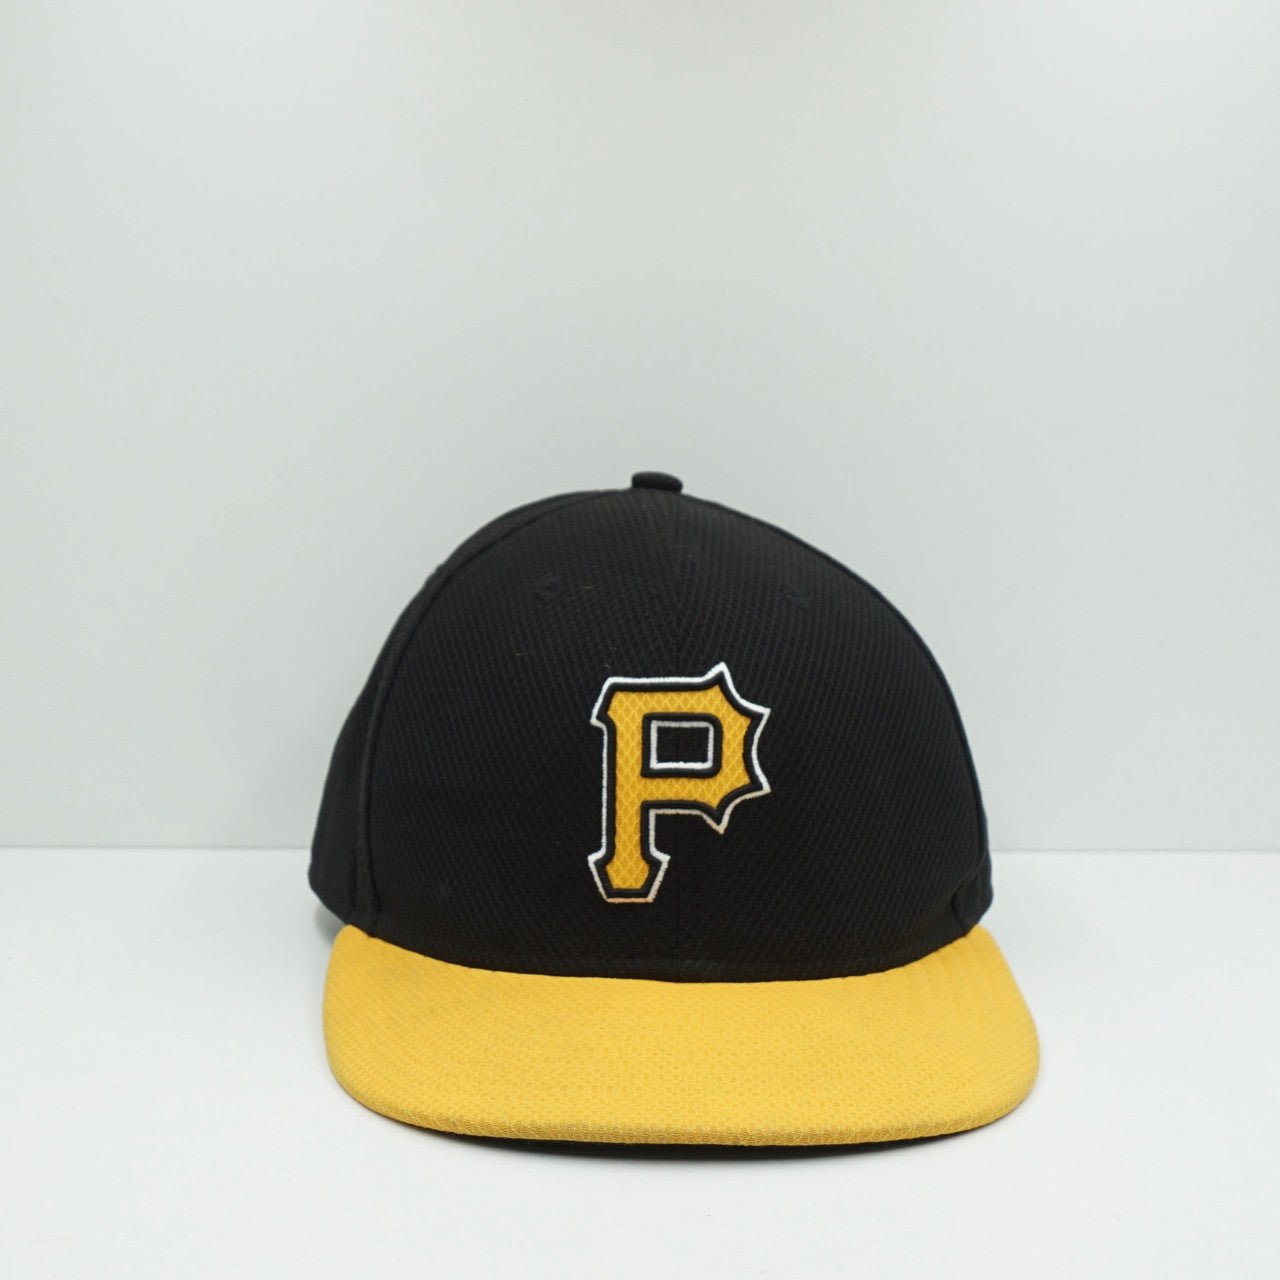 New Era Pittsburgh Pirates Fitted Cap